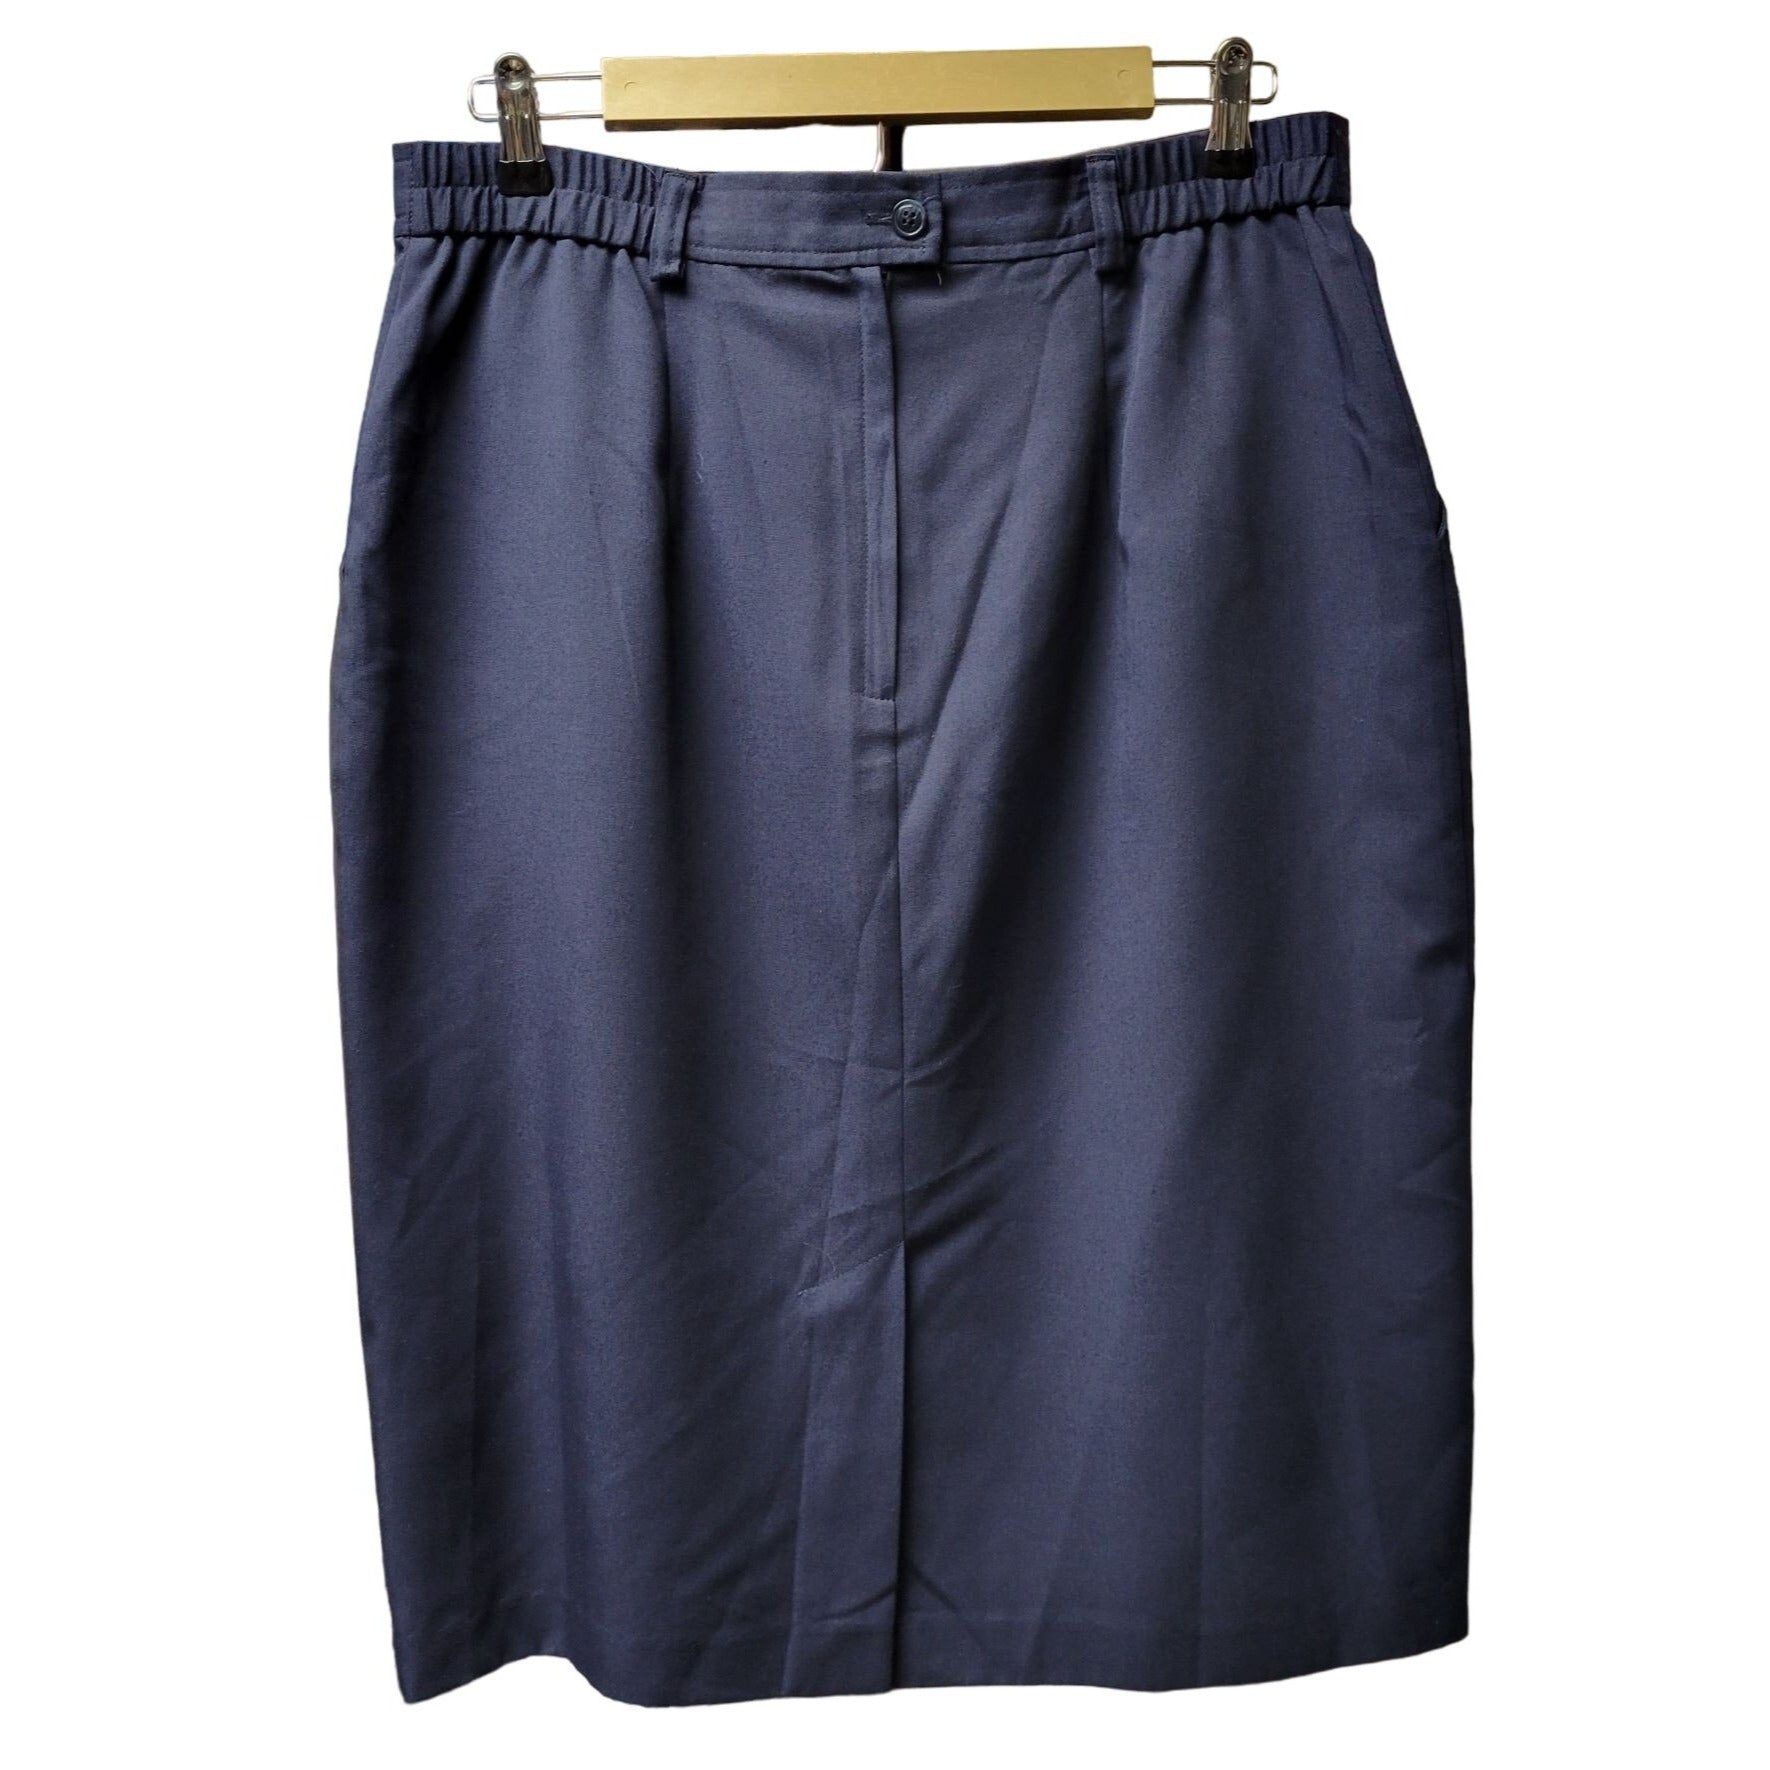 Vintage Counterparts Brand. Navy Blue Midi Women's Basic Skirt, Size 16